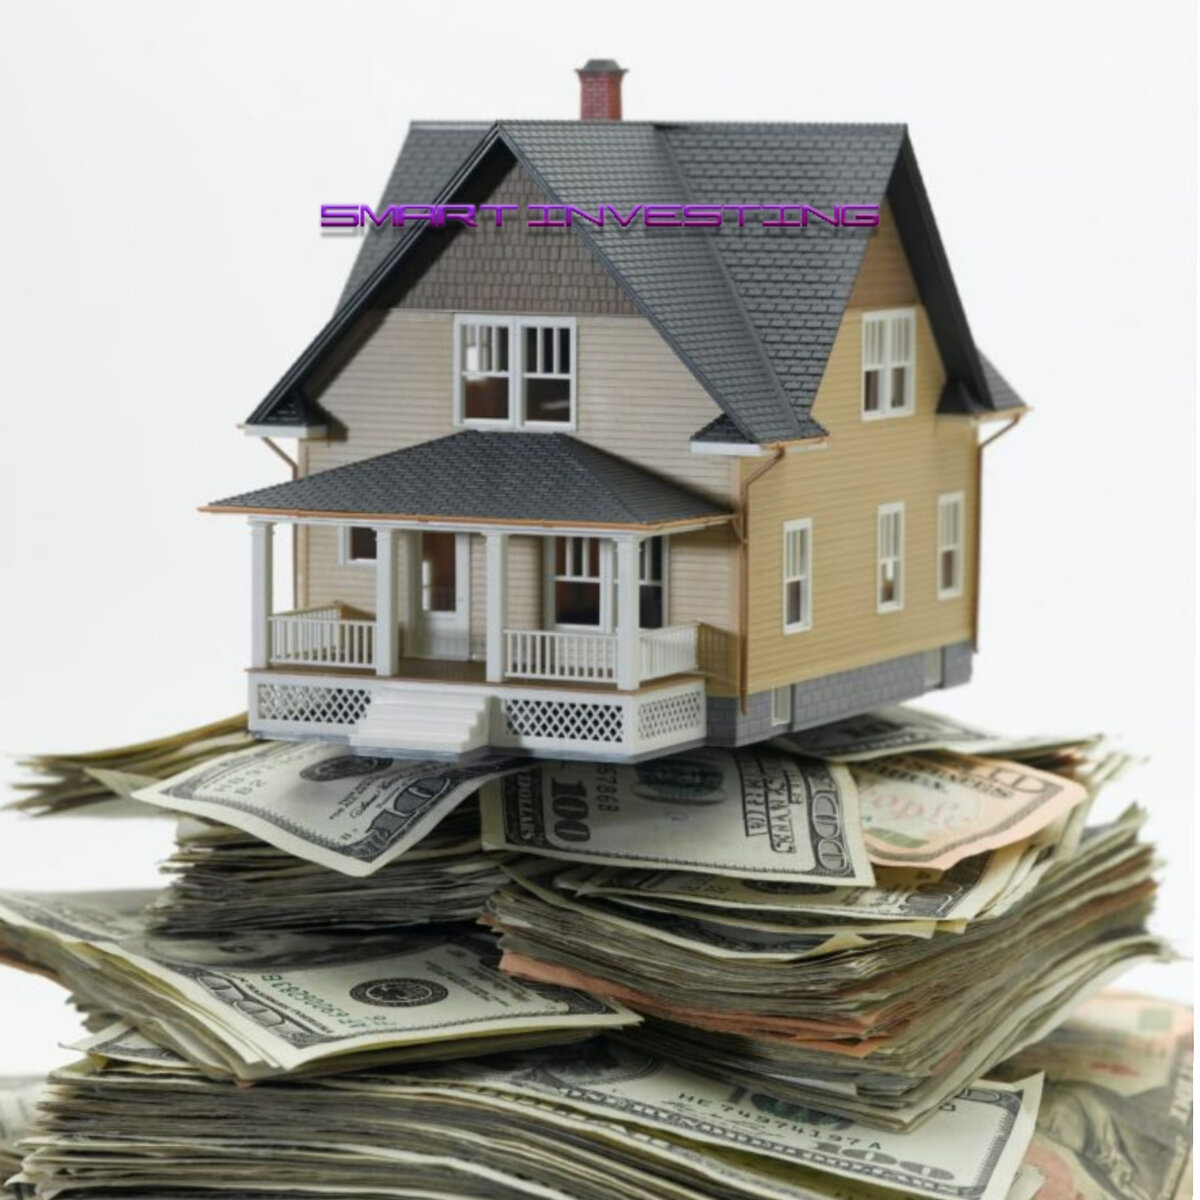 Залог недвижимости дают деньги. Ипотека недвижимость. Залог недвижимости. Вложение в недвижимость. Займ под недвижимость.